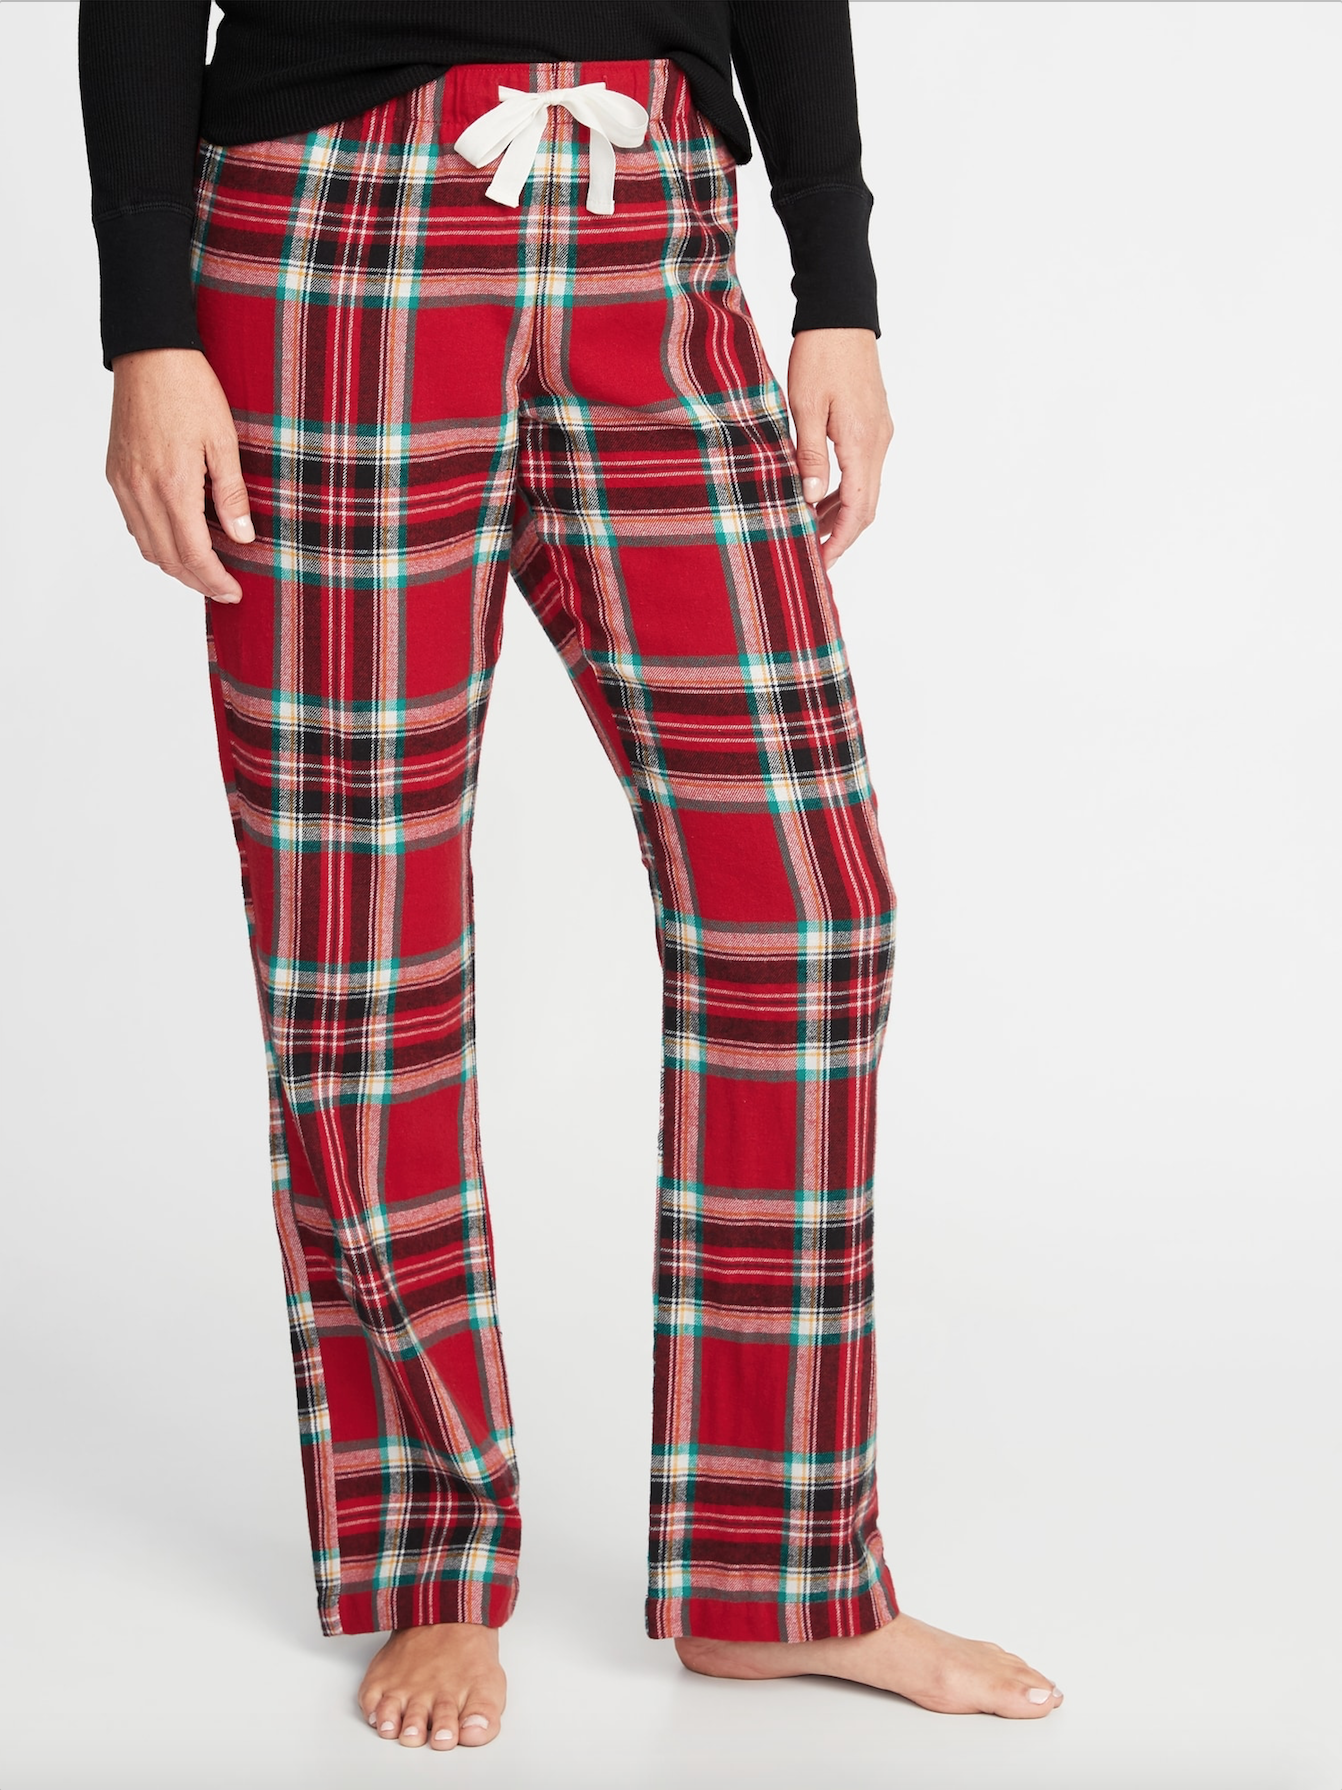 Patterned Flannel Sleep Pants